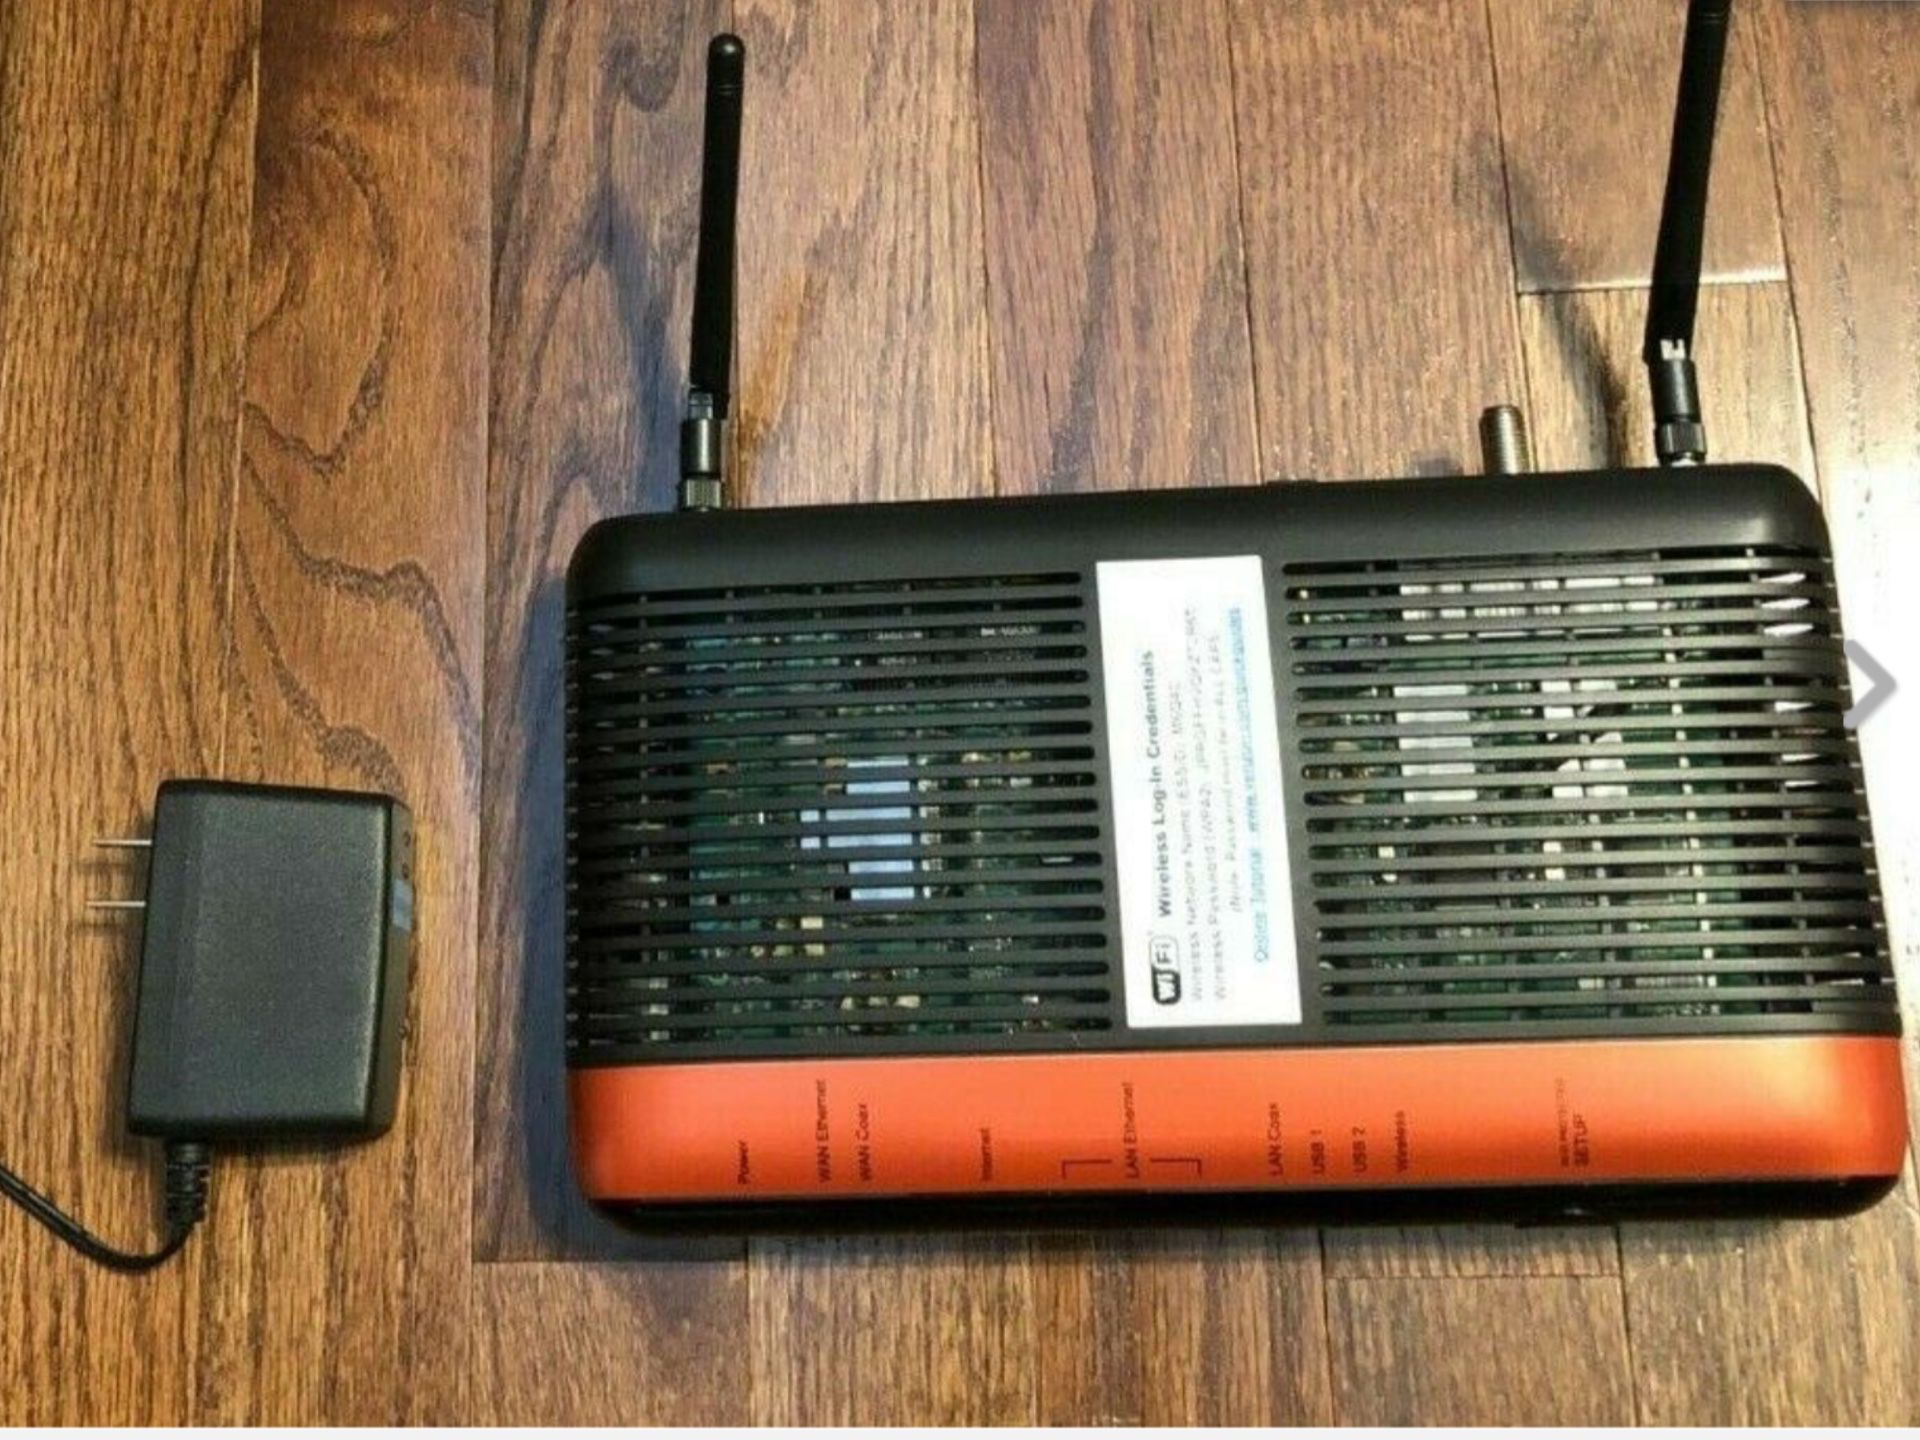 Verizon / Actiontec Wireless Broadband Router MI424WR internet modem